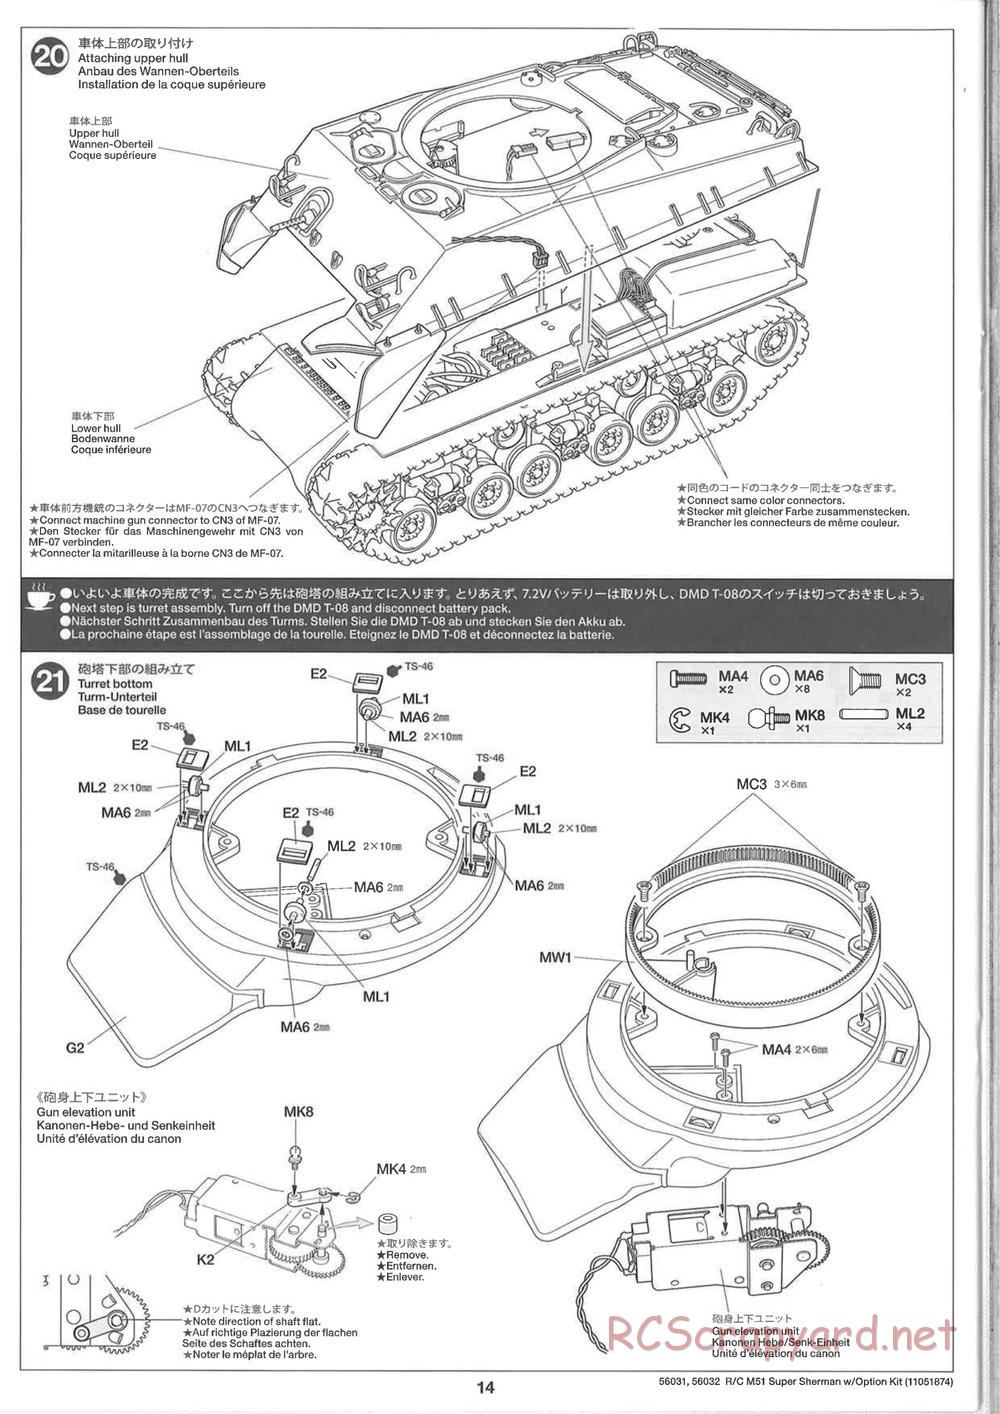 Tamiya - Super Sherman M-51 - 1/16 Scale Chassis - Manual - Page 14